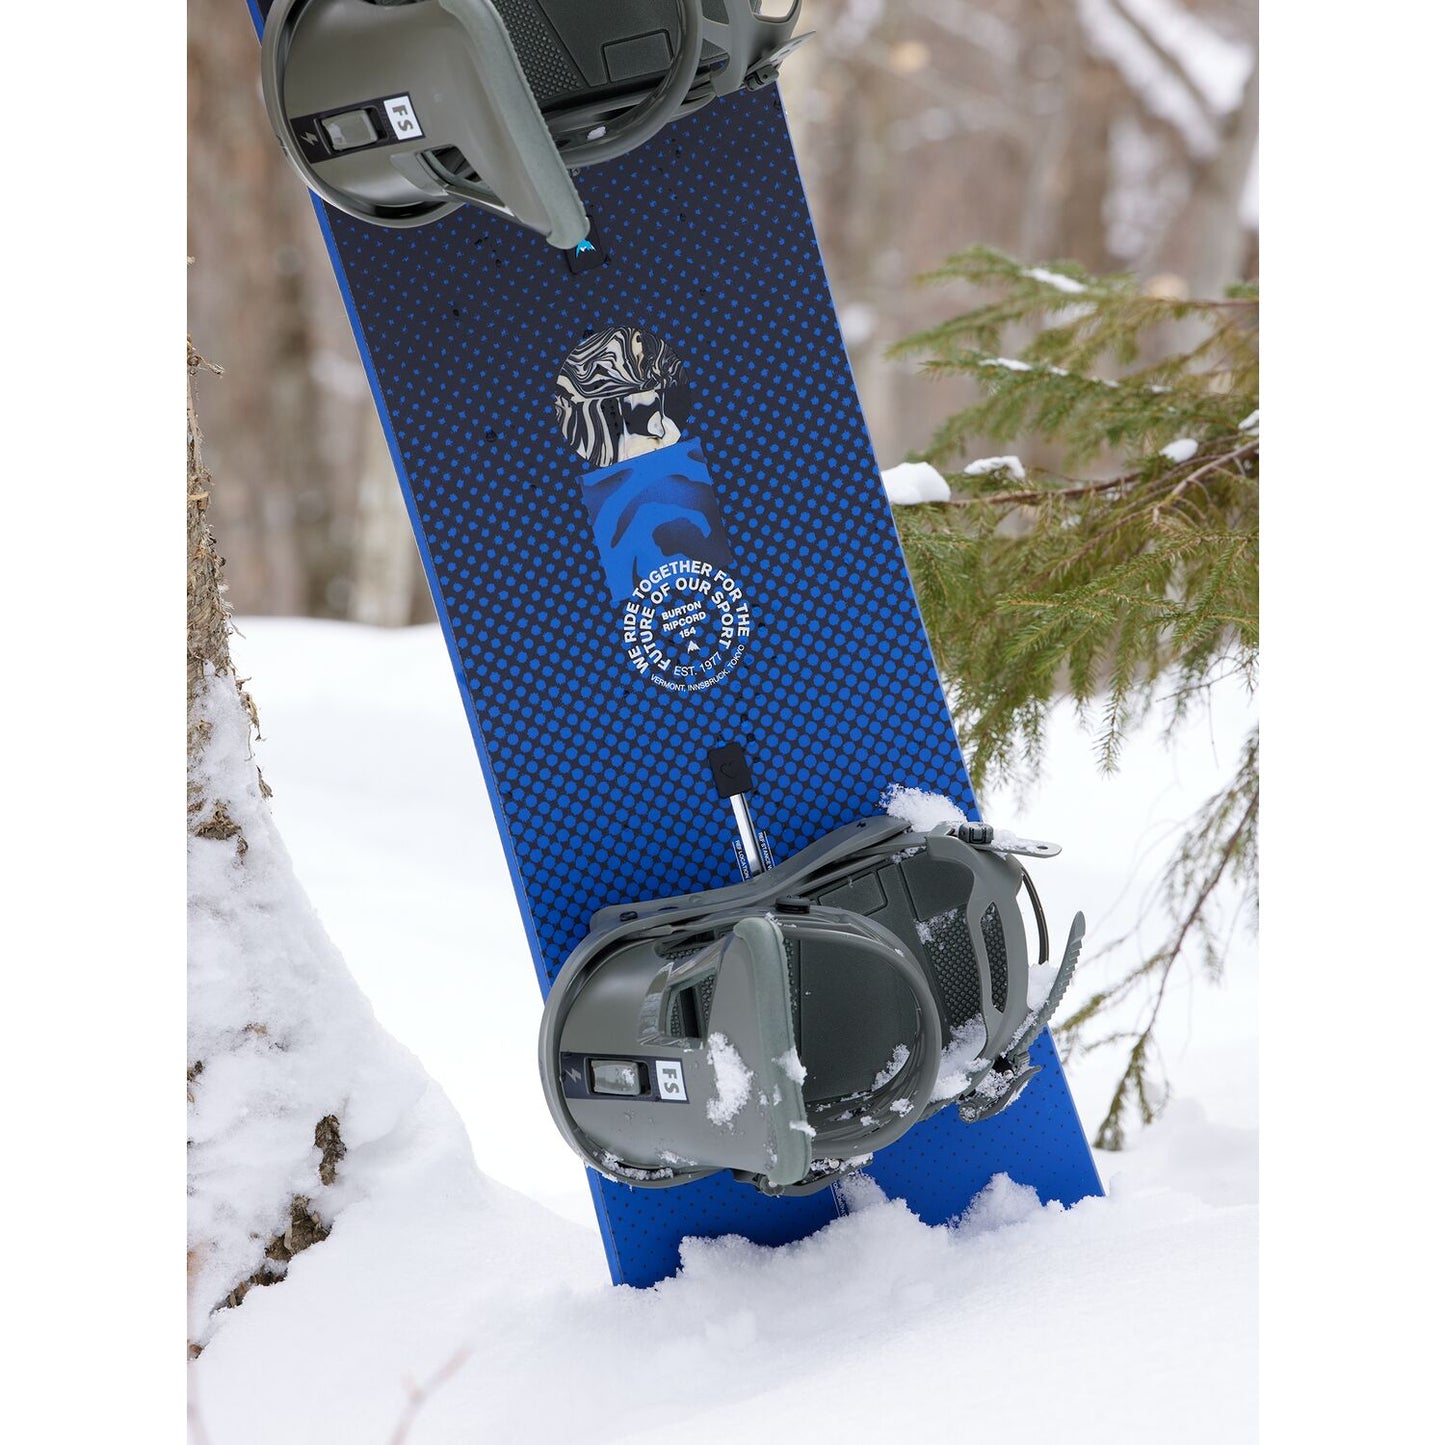 Burton Ripcord Snowboard 2024